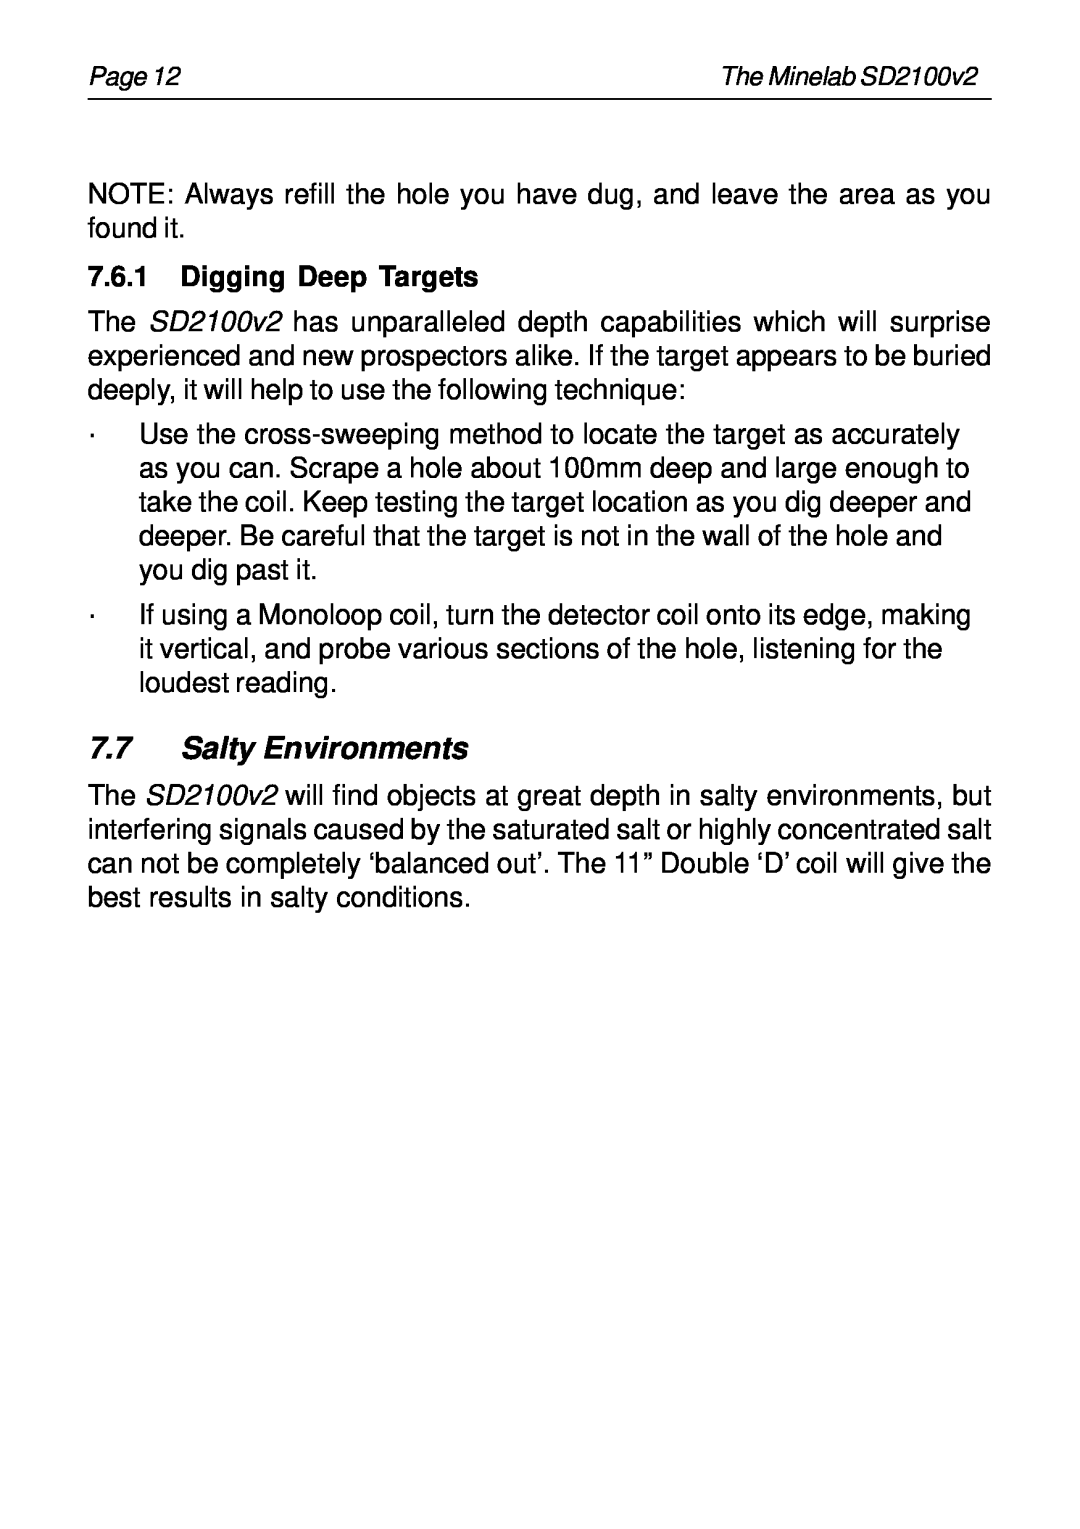 Minelab SD2100v2 instruction manual Salty Environments, Digging Deep Targets 